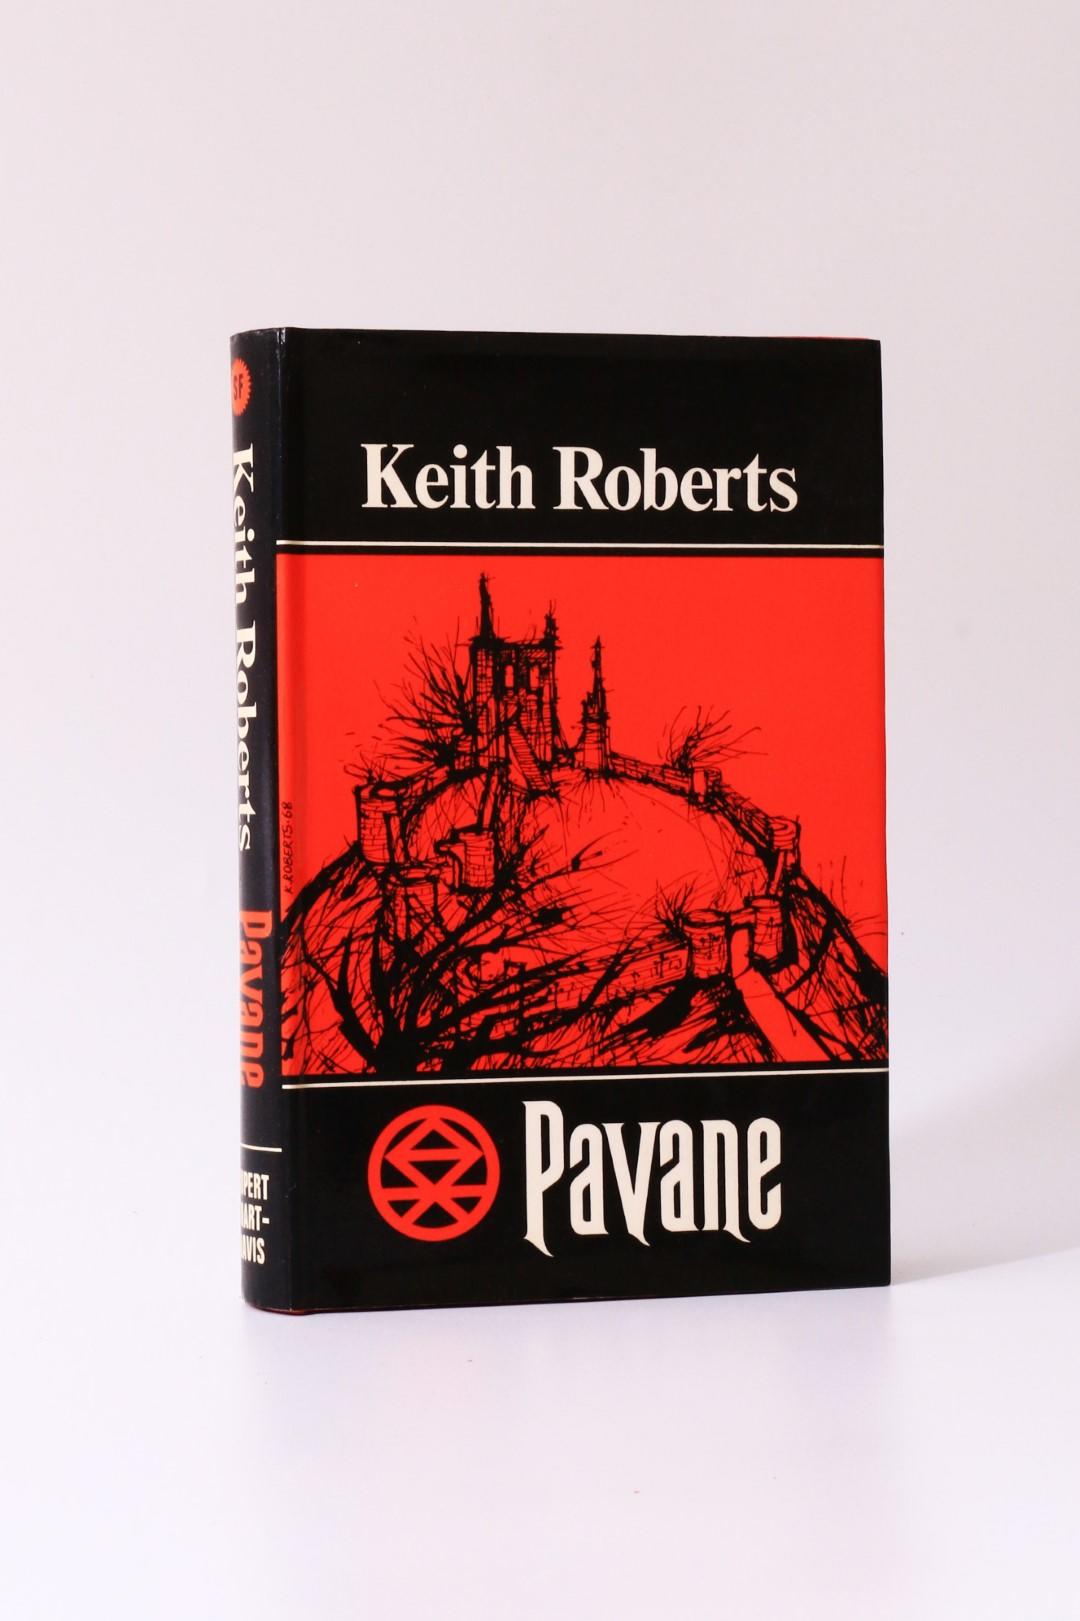 Keith Roberts - Pavane - Rupert Hart-Davis, 1968, First Edition.